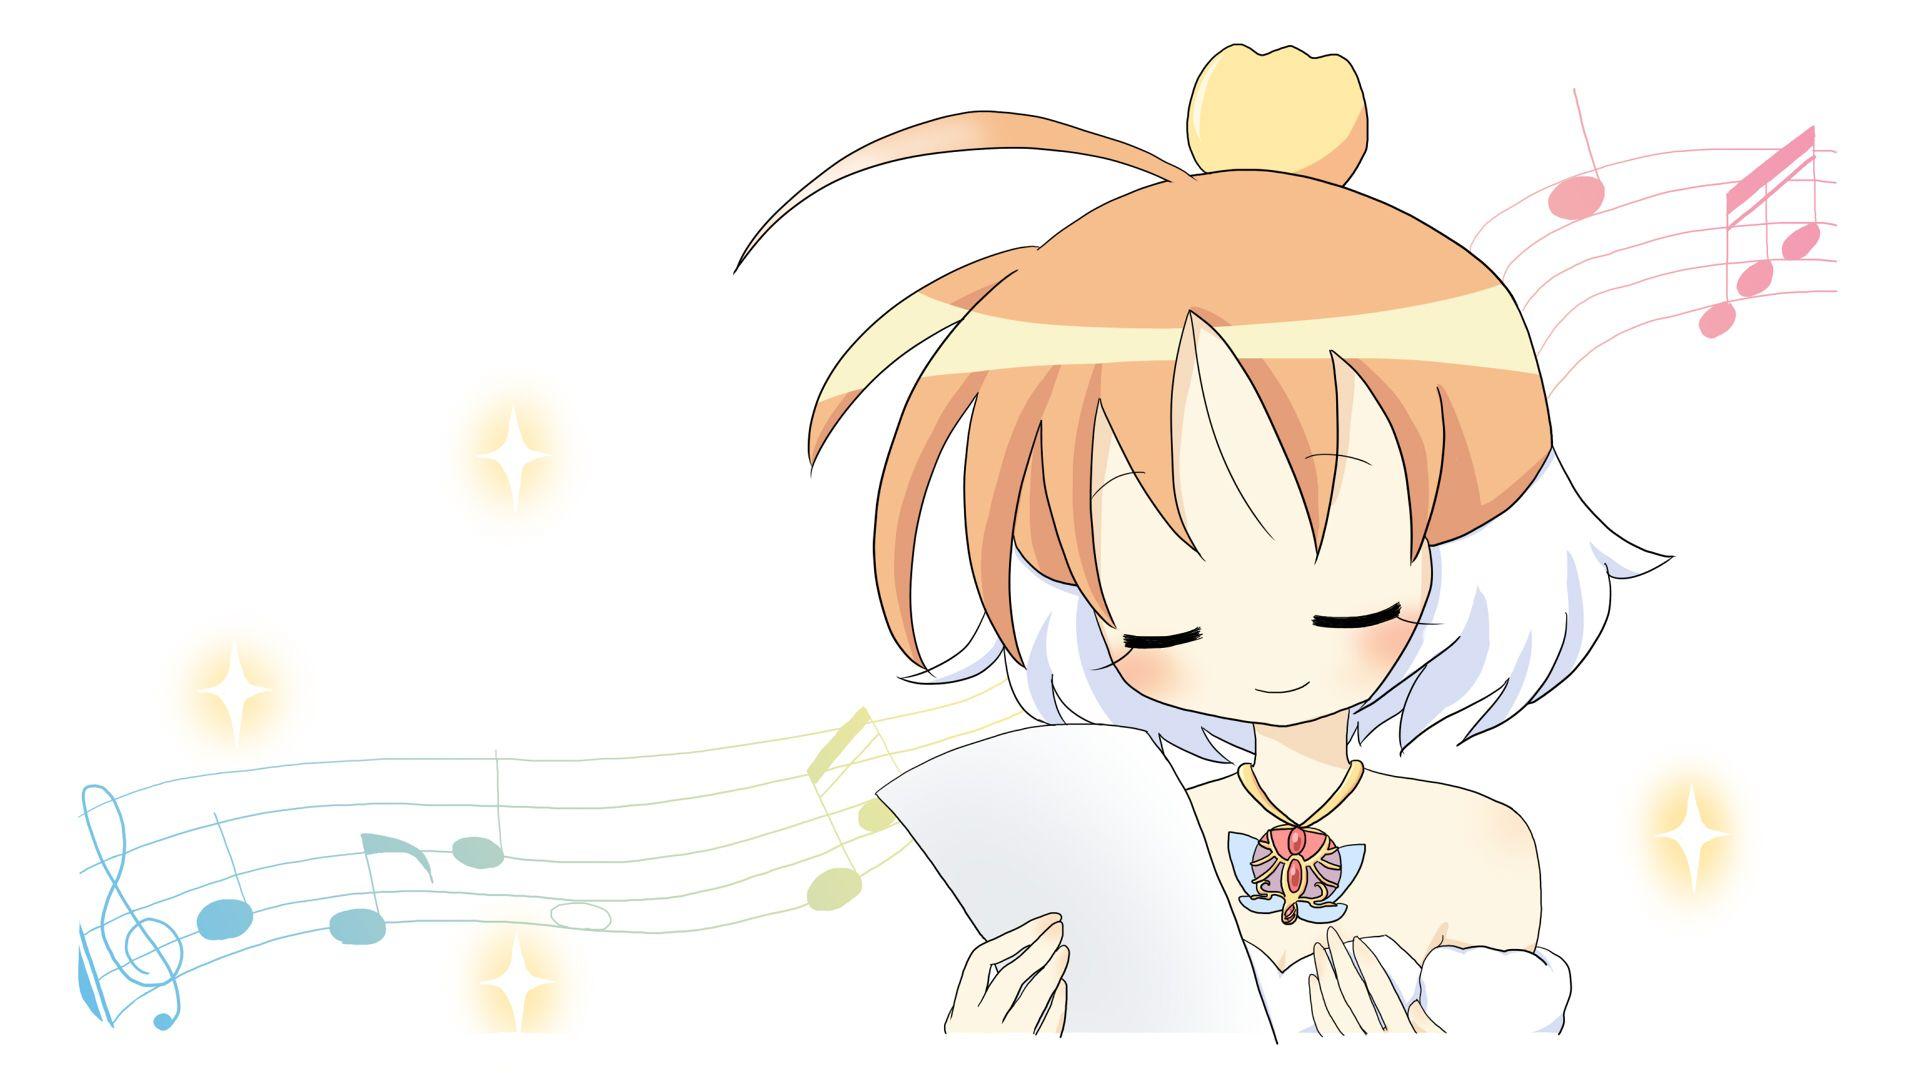 Princess Tutu - Other & Anime Background Wallpapers on Desktop Nexus (Image  2086244)